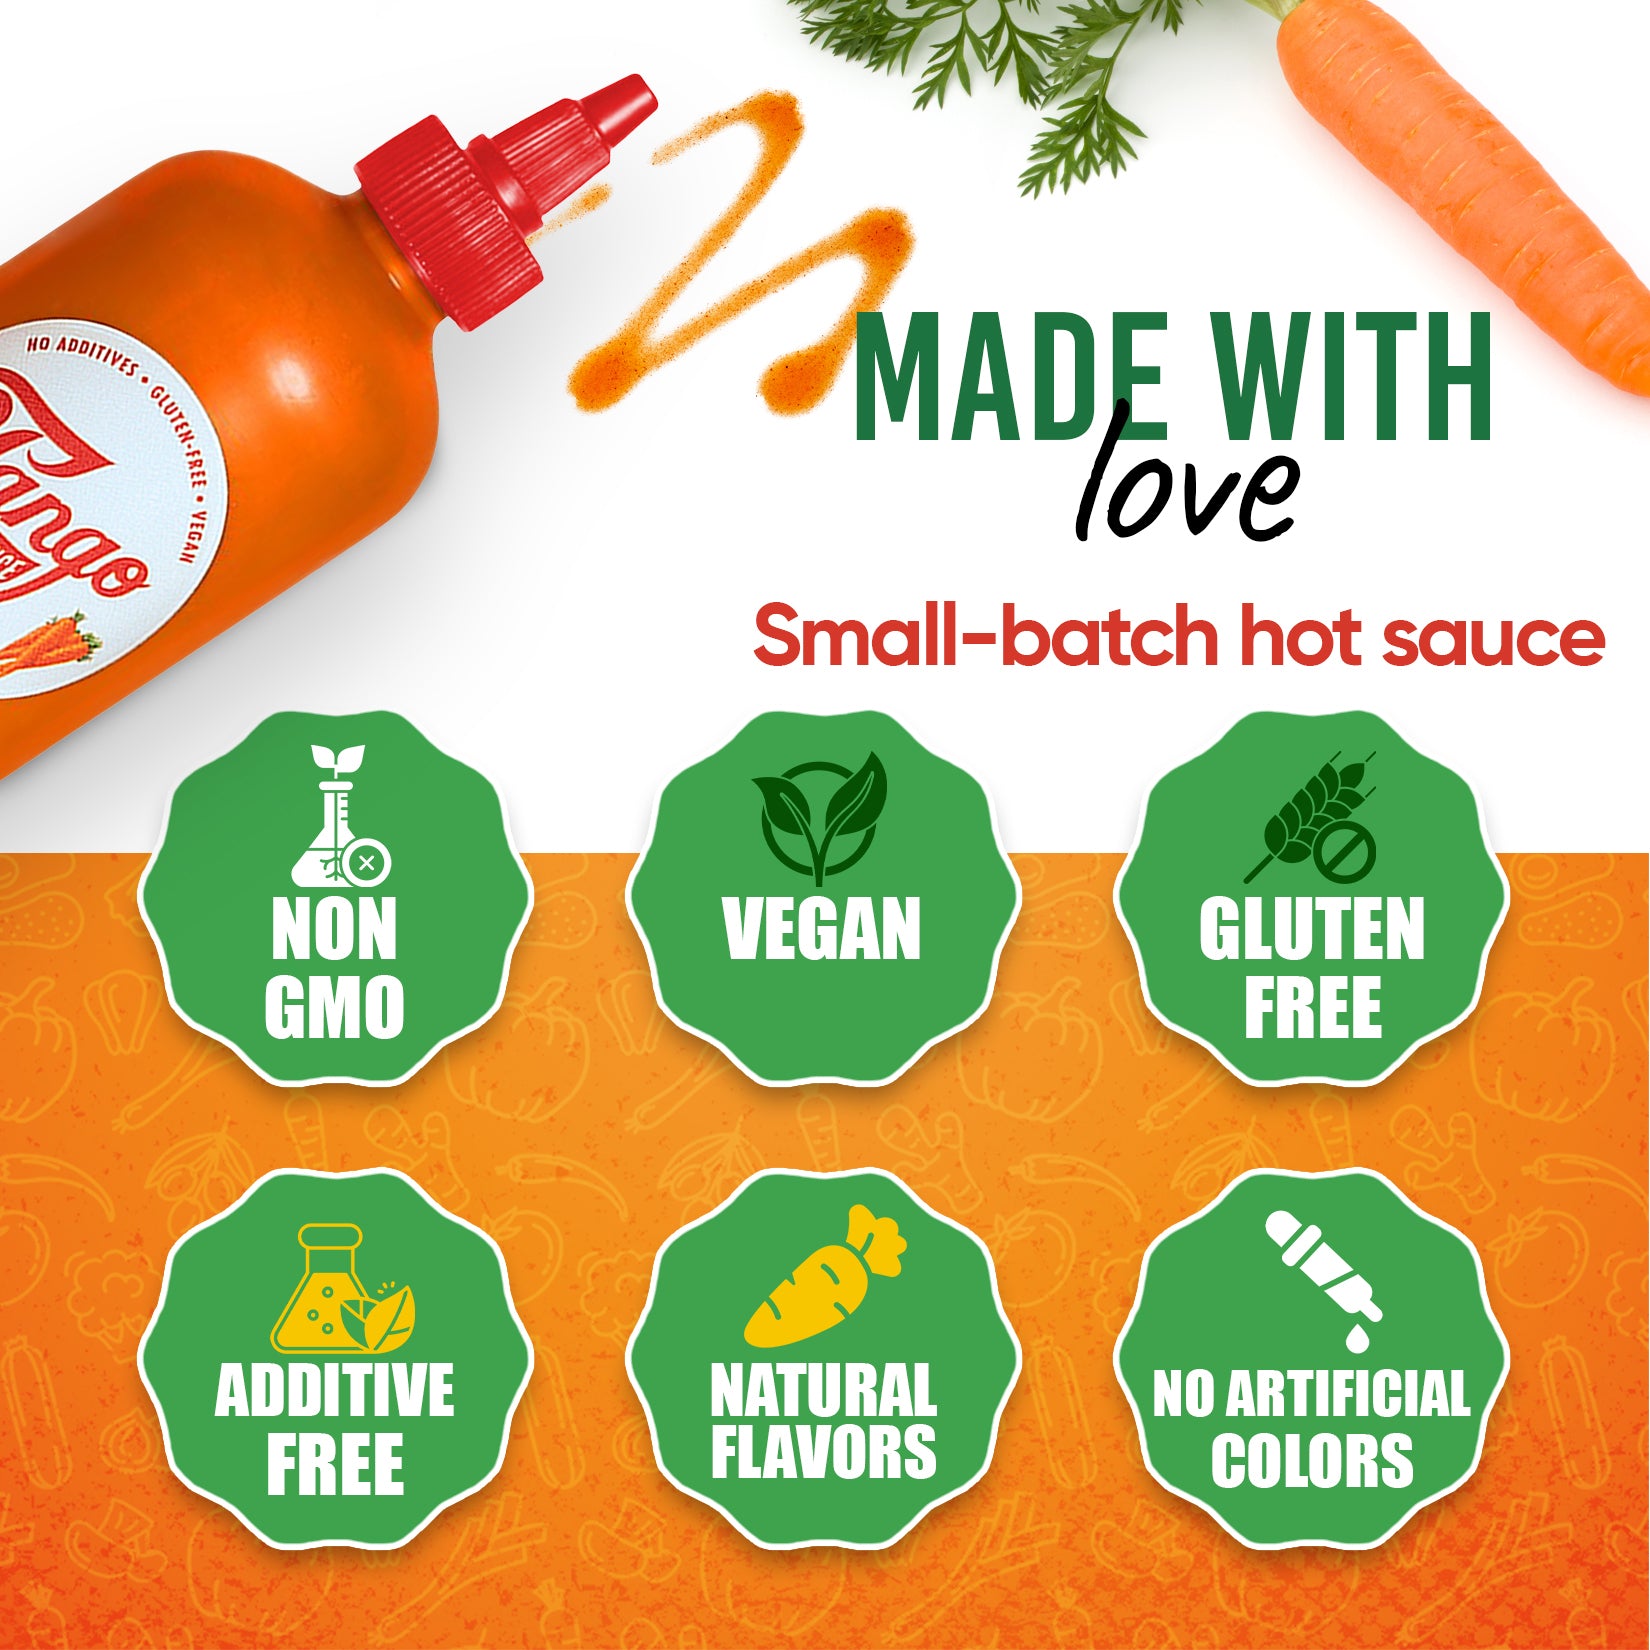 The Original Carrot-Based Hot Sauce